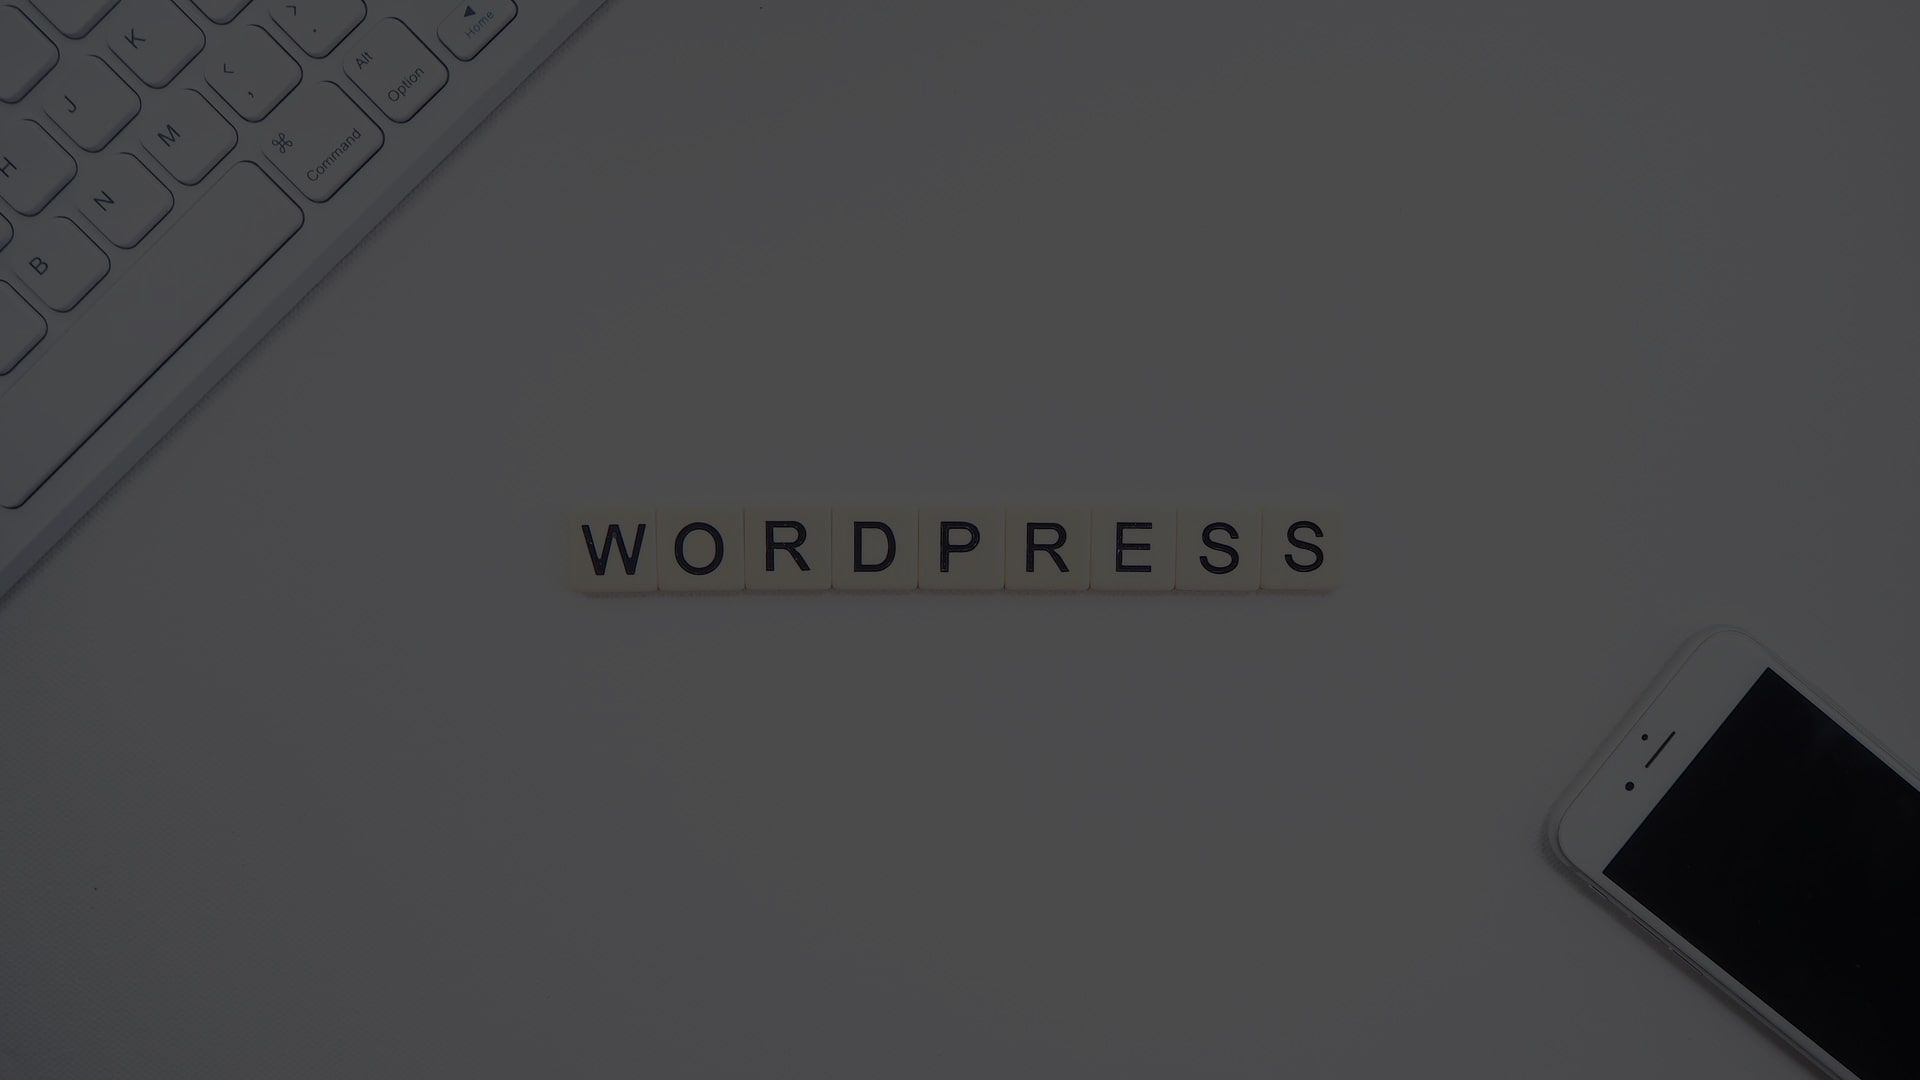 What is WordPress?